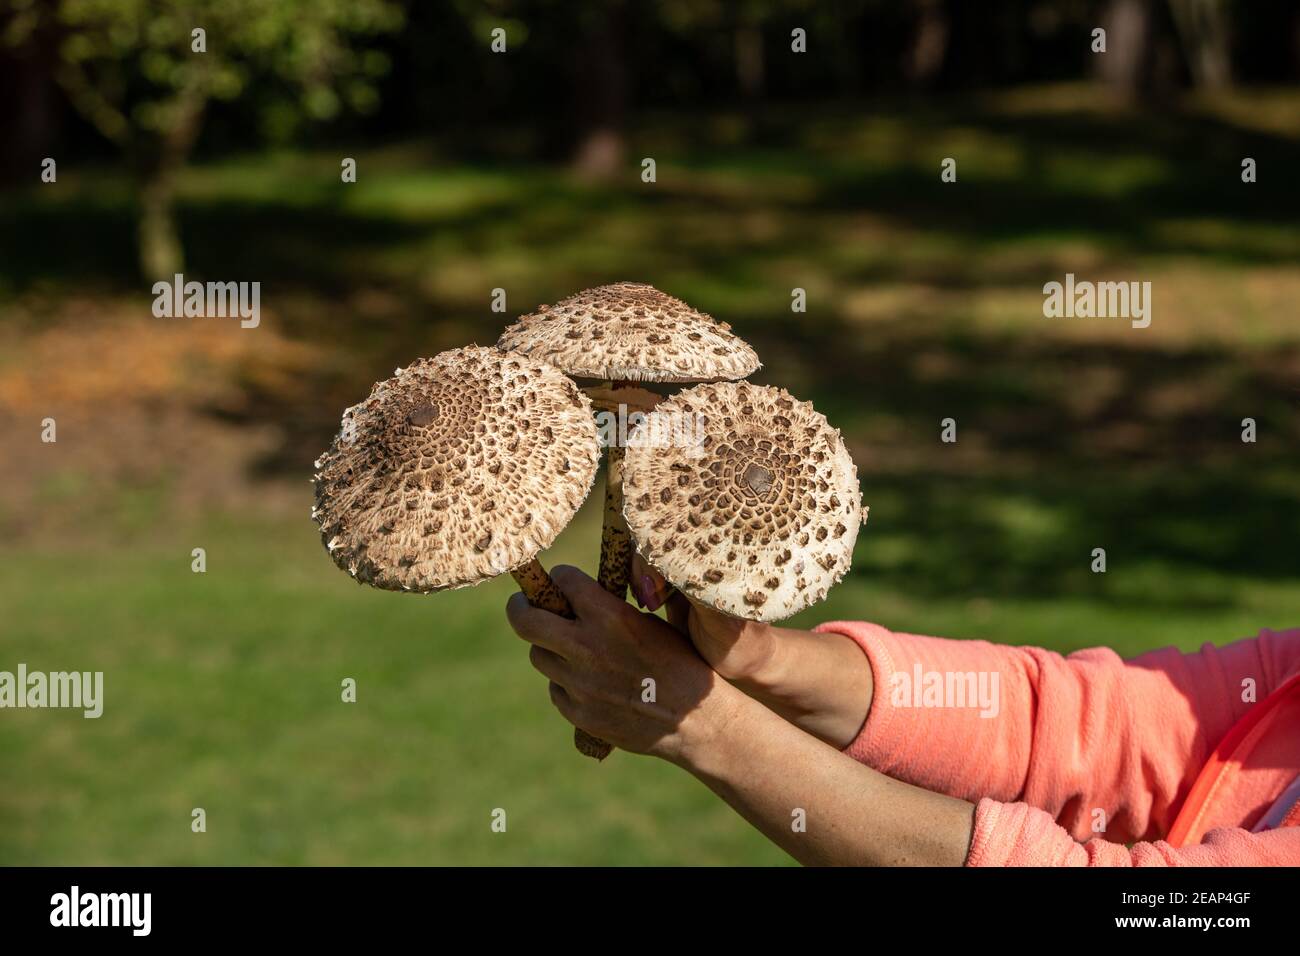 Ripe parasol mushroom  in the mushroom picker's hand Stock Photo